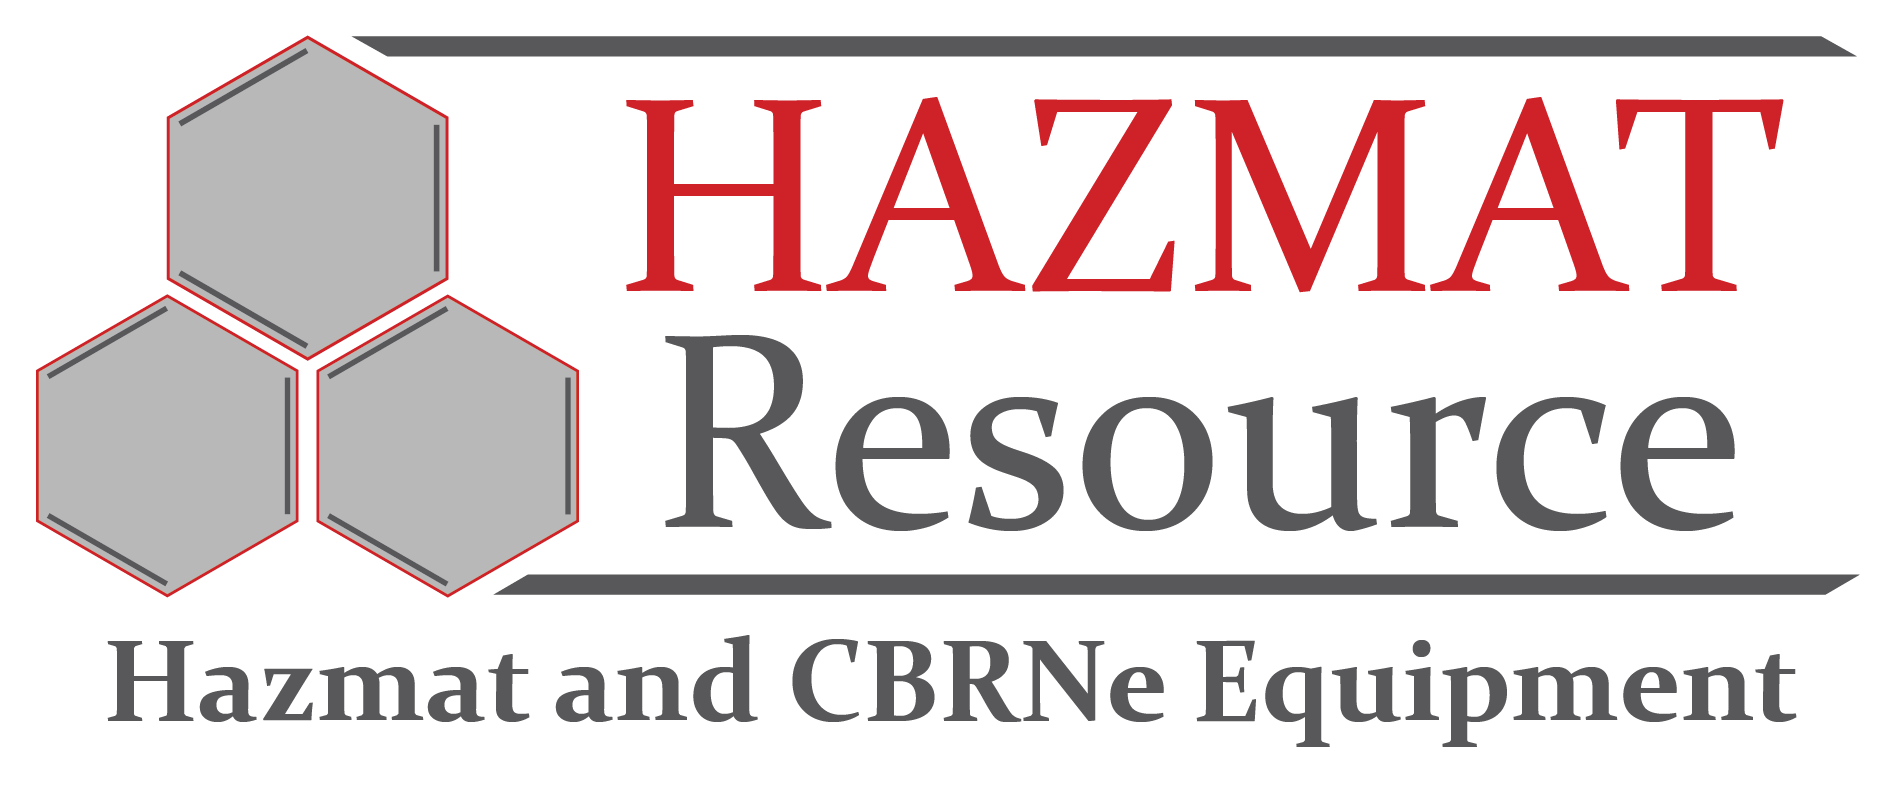 HAZMAT Resource hazmatresource.com